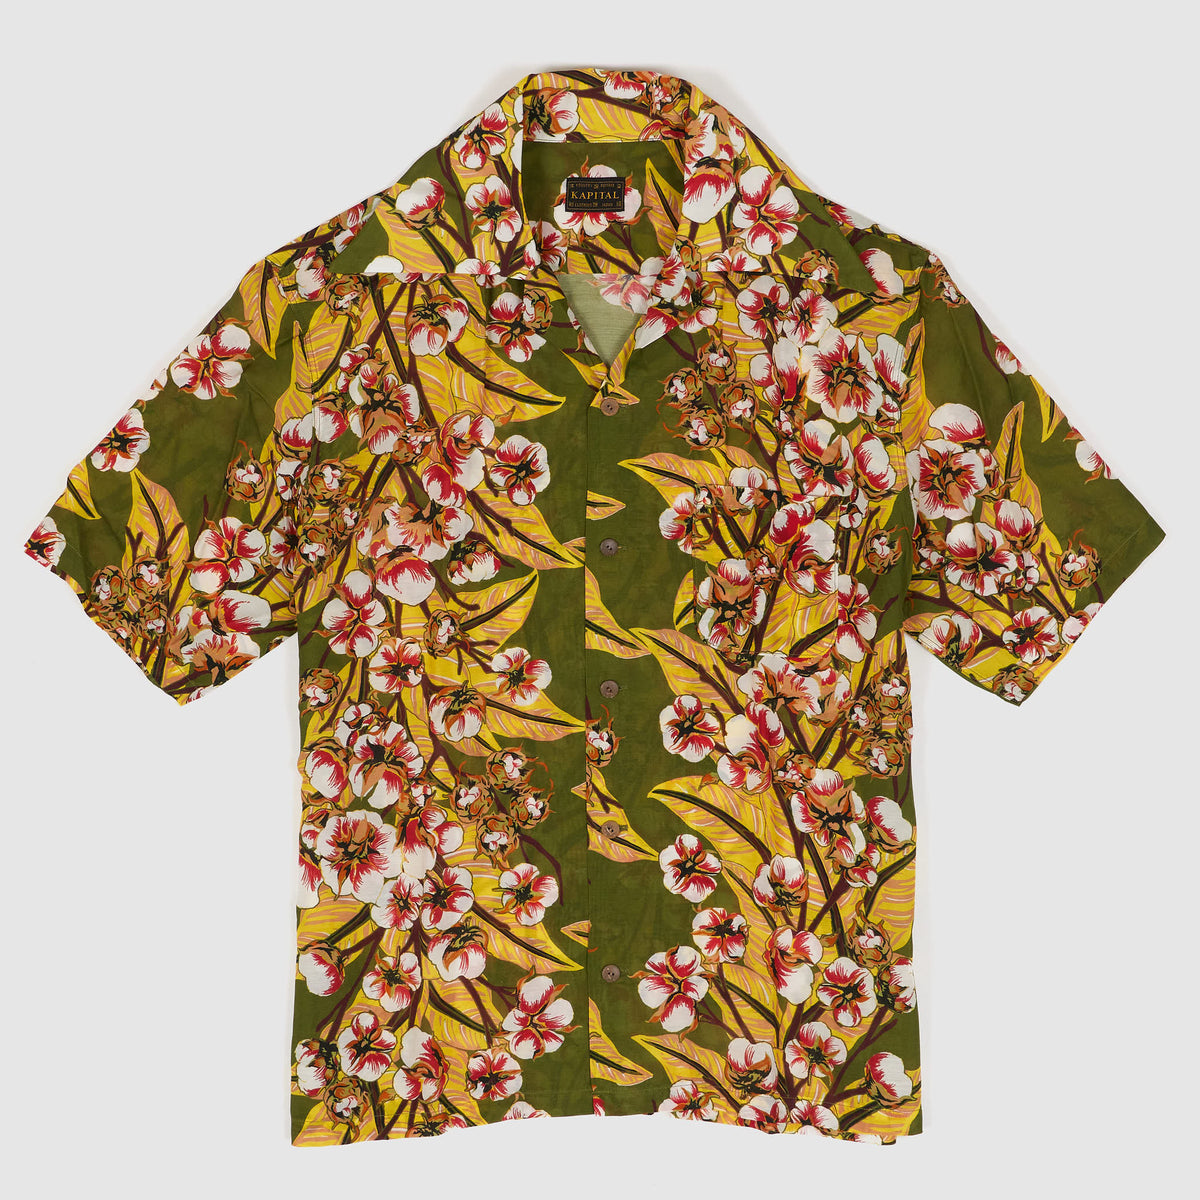 Kapital Hawaiian Flower Power Camp Shirt